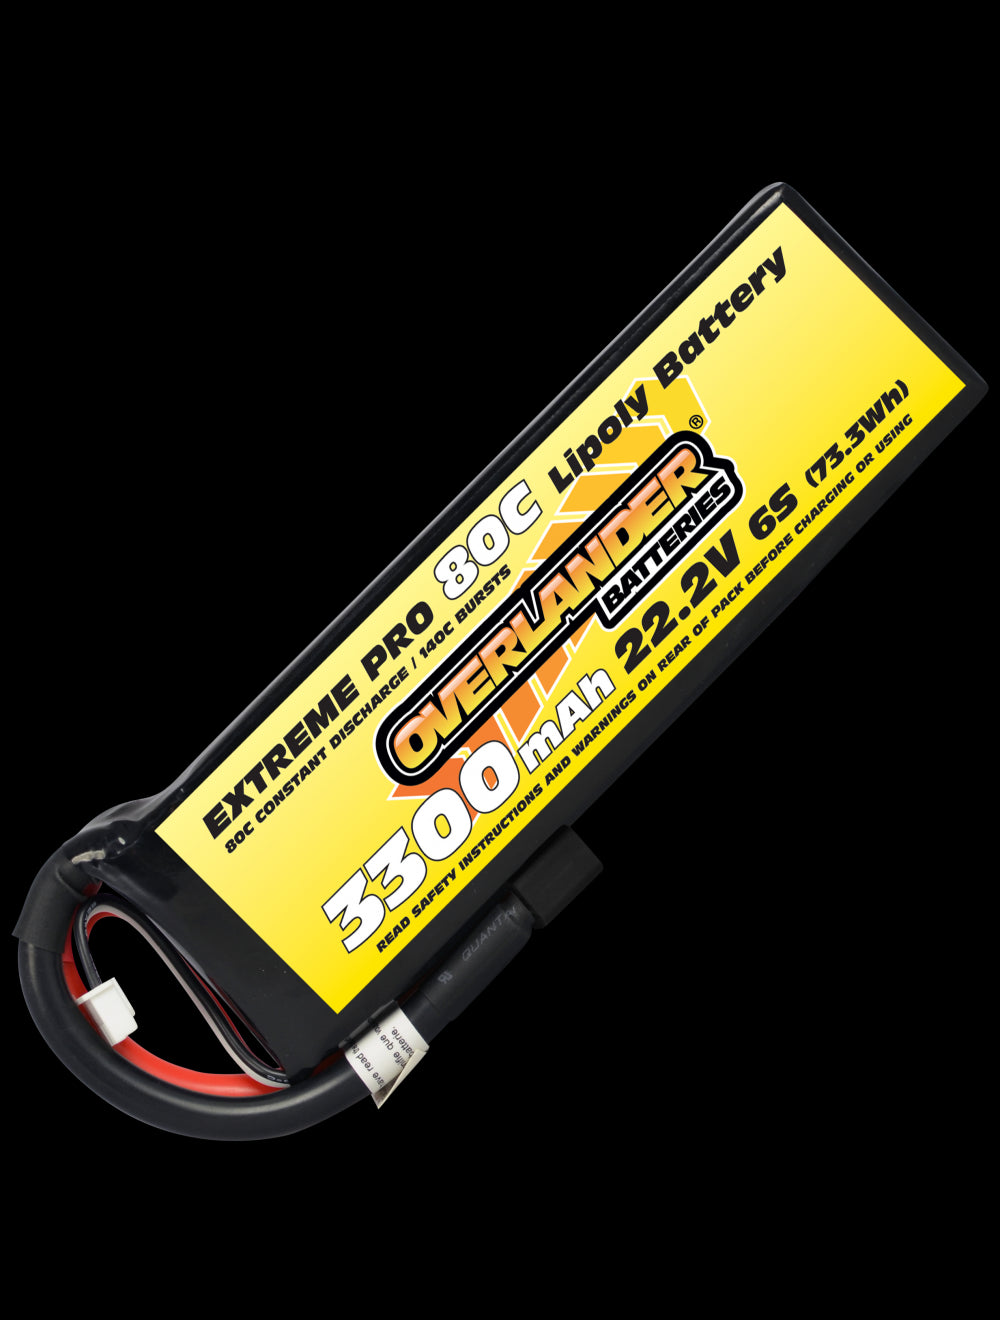 Overlander 3300mAh 22.2V 6S 80C Extreme Pro LiPo Battery - Deans Connector 2406